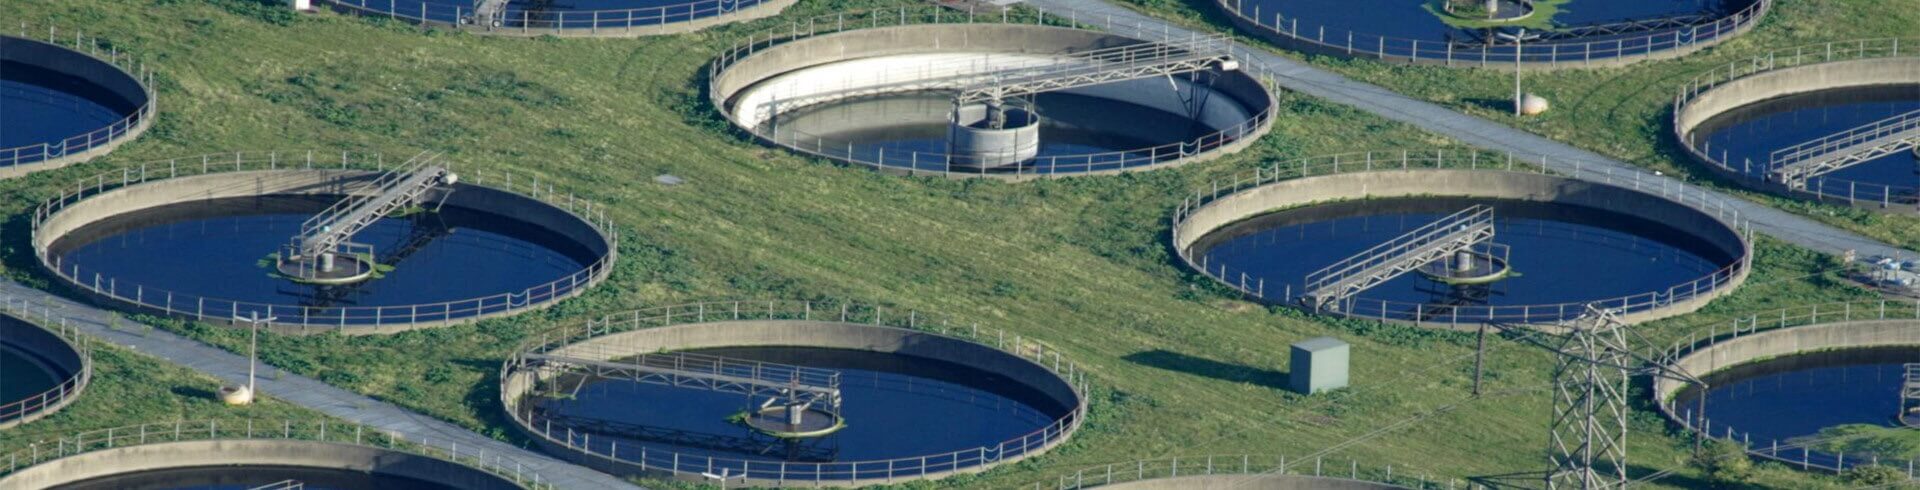 MAN 1000kW 1MW 2MW waste water biogas power plant ETTES POWER